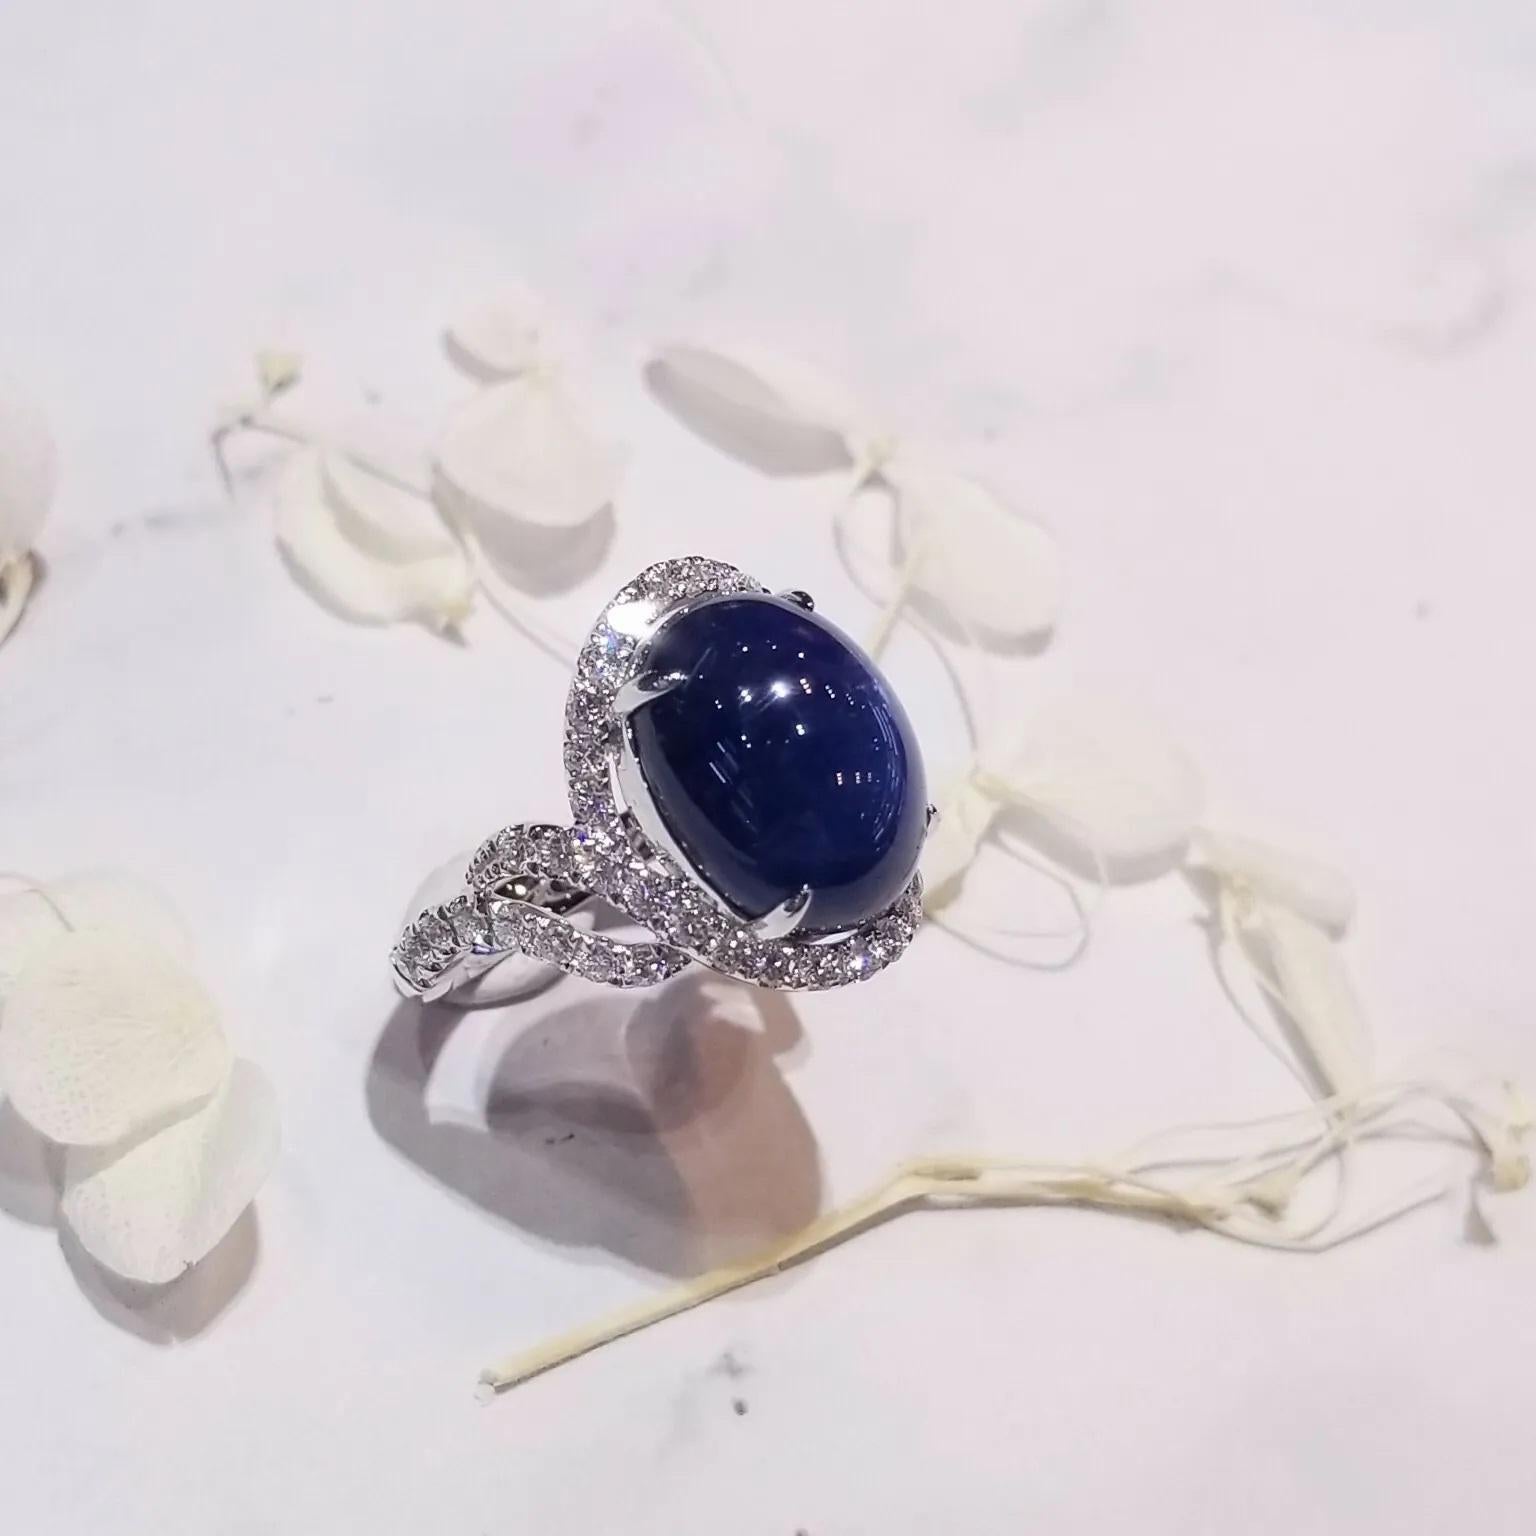 IGI Certified 11.12 Carat Blue Cabochon Sapphire & Diamond Ring in 18K WhiteGold For Sale 1